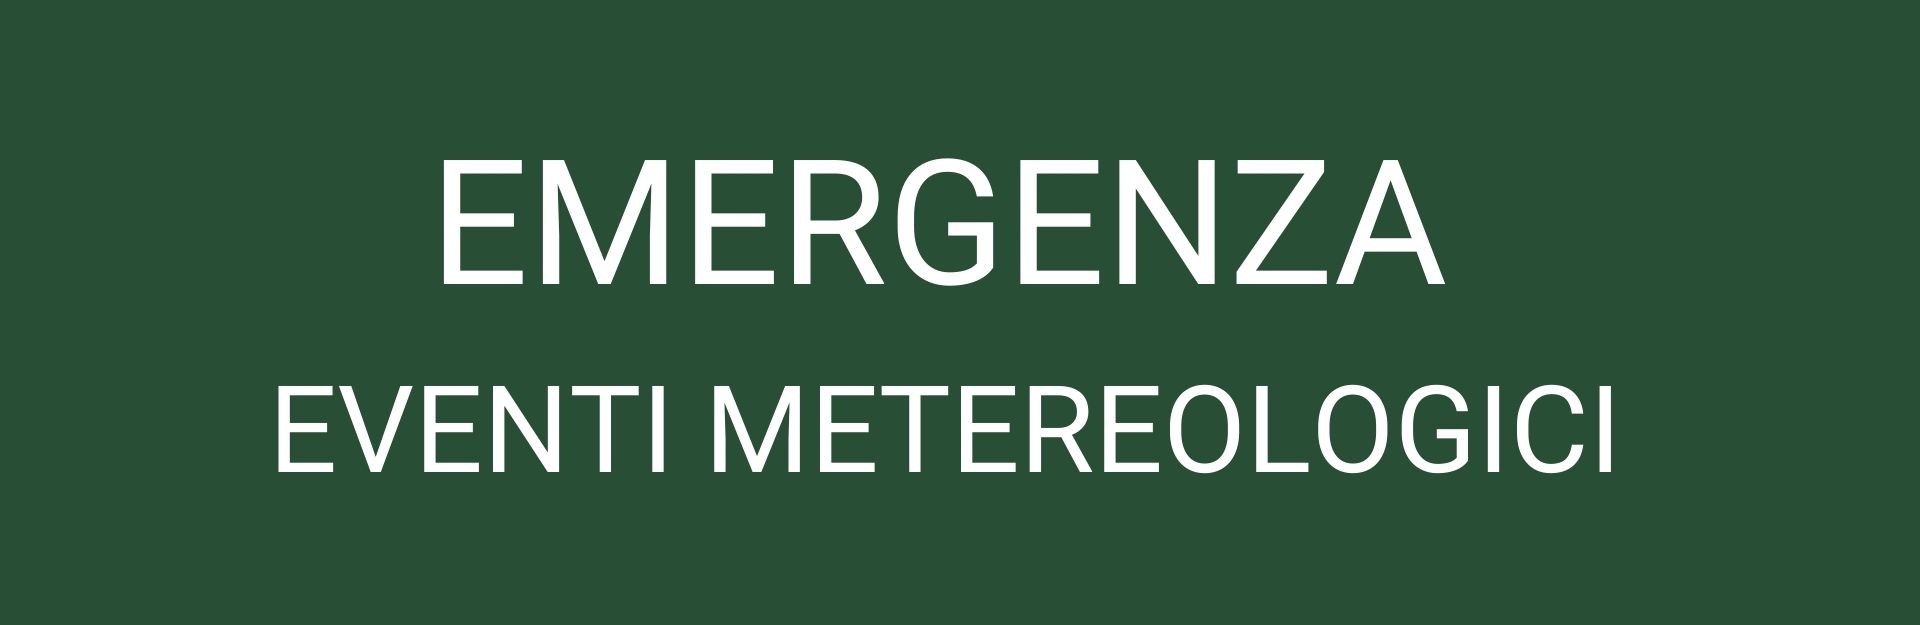 Banner eventi metereologici - desktop